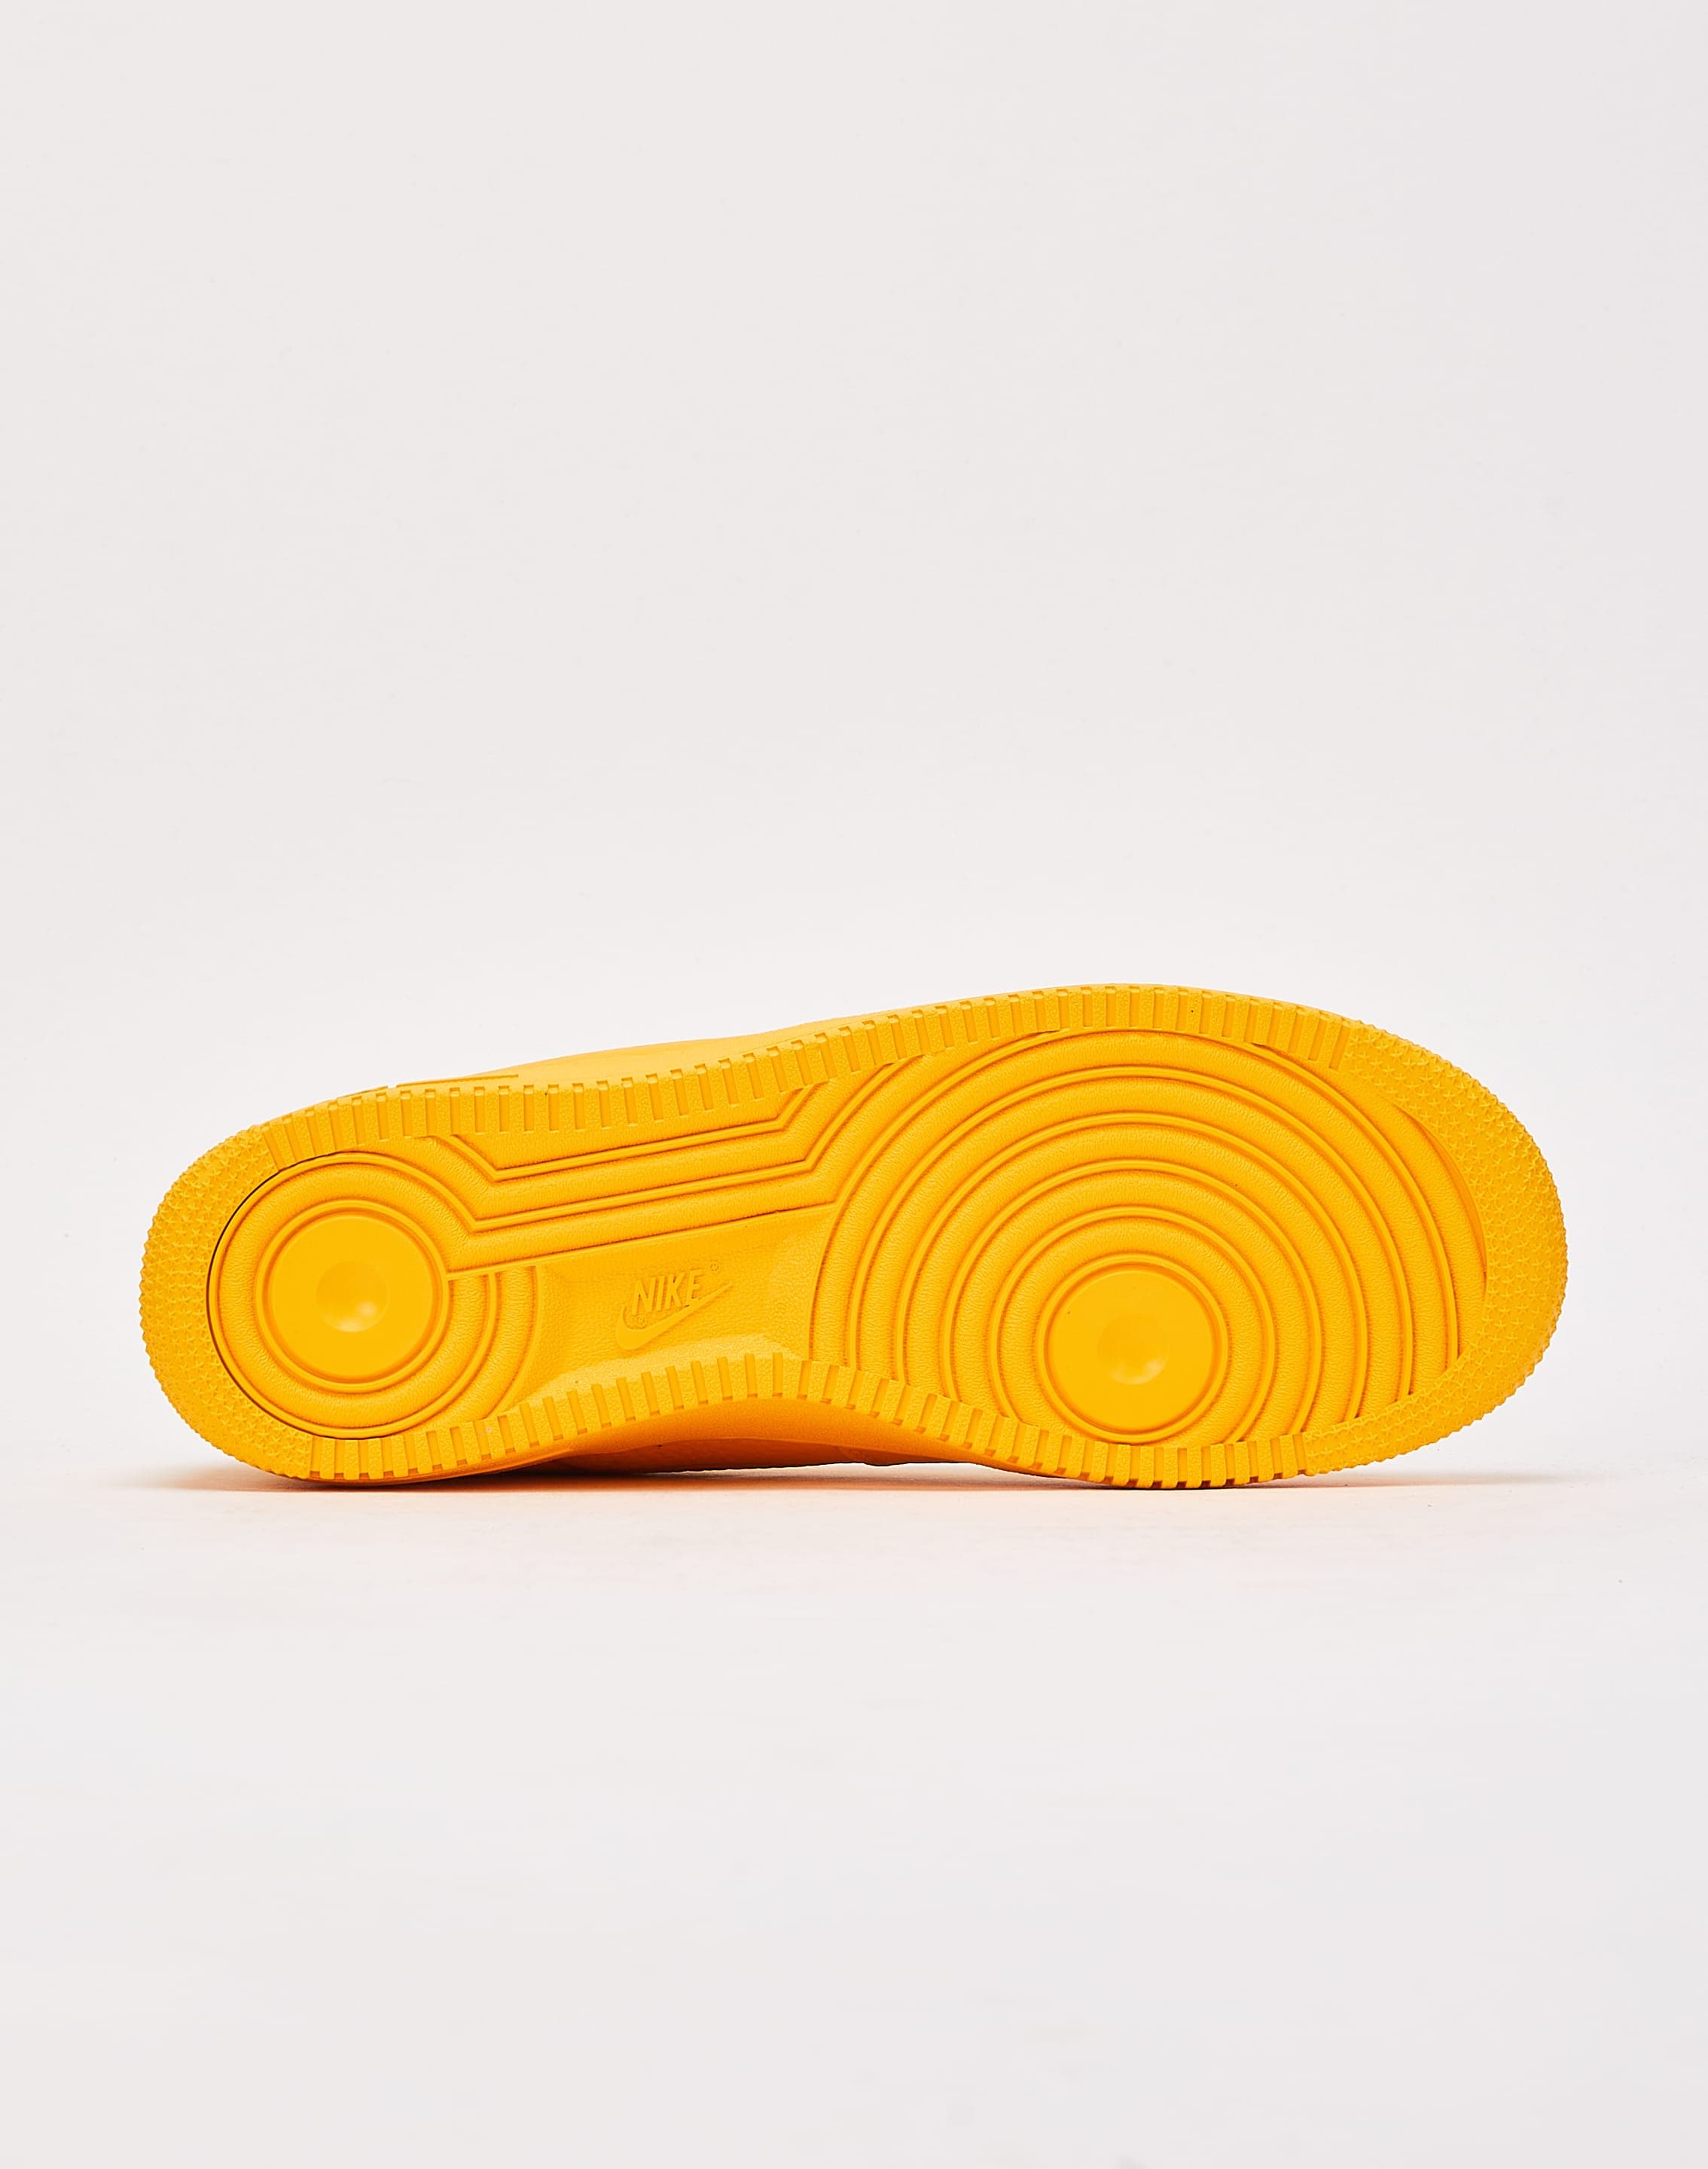 Nike Air Force 1 Pro-Tech Waterproof On Foot Sneaker Review